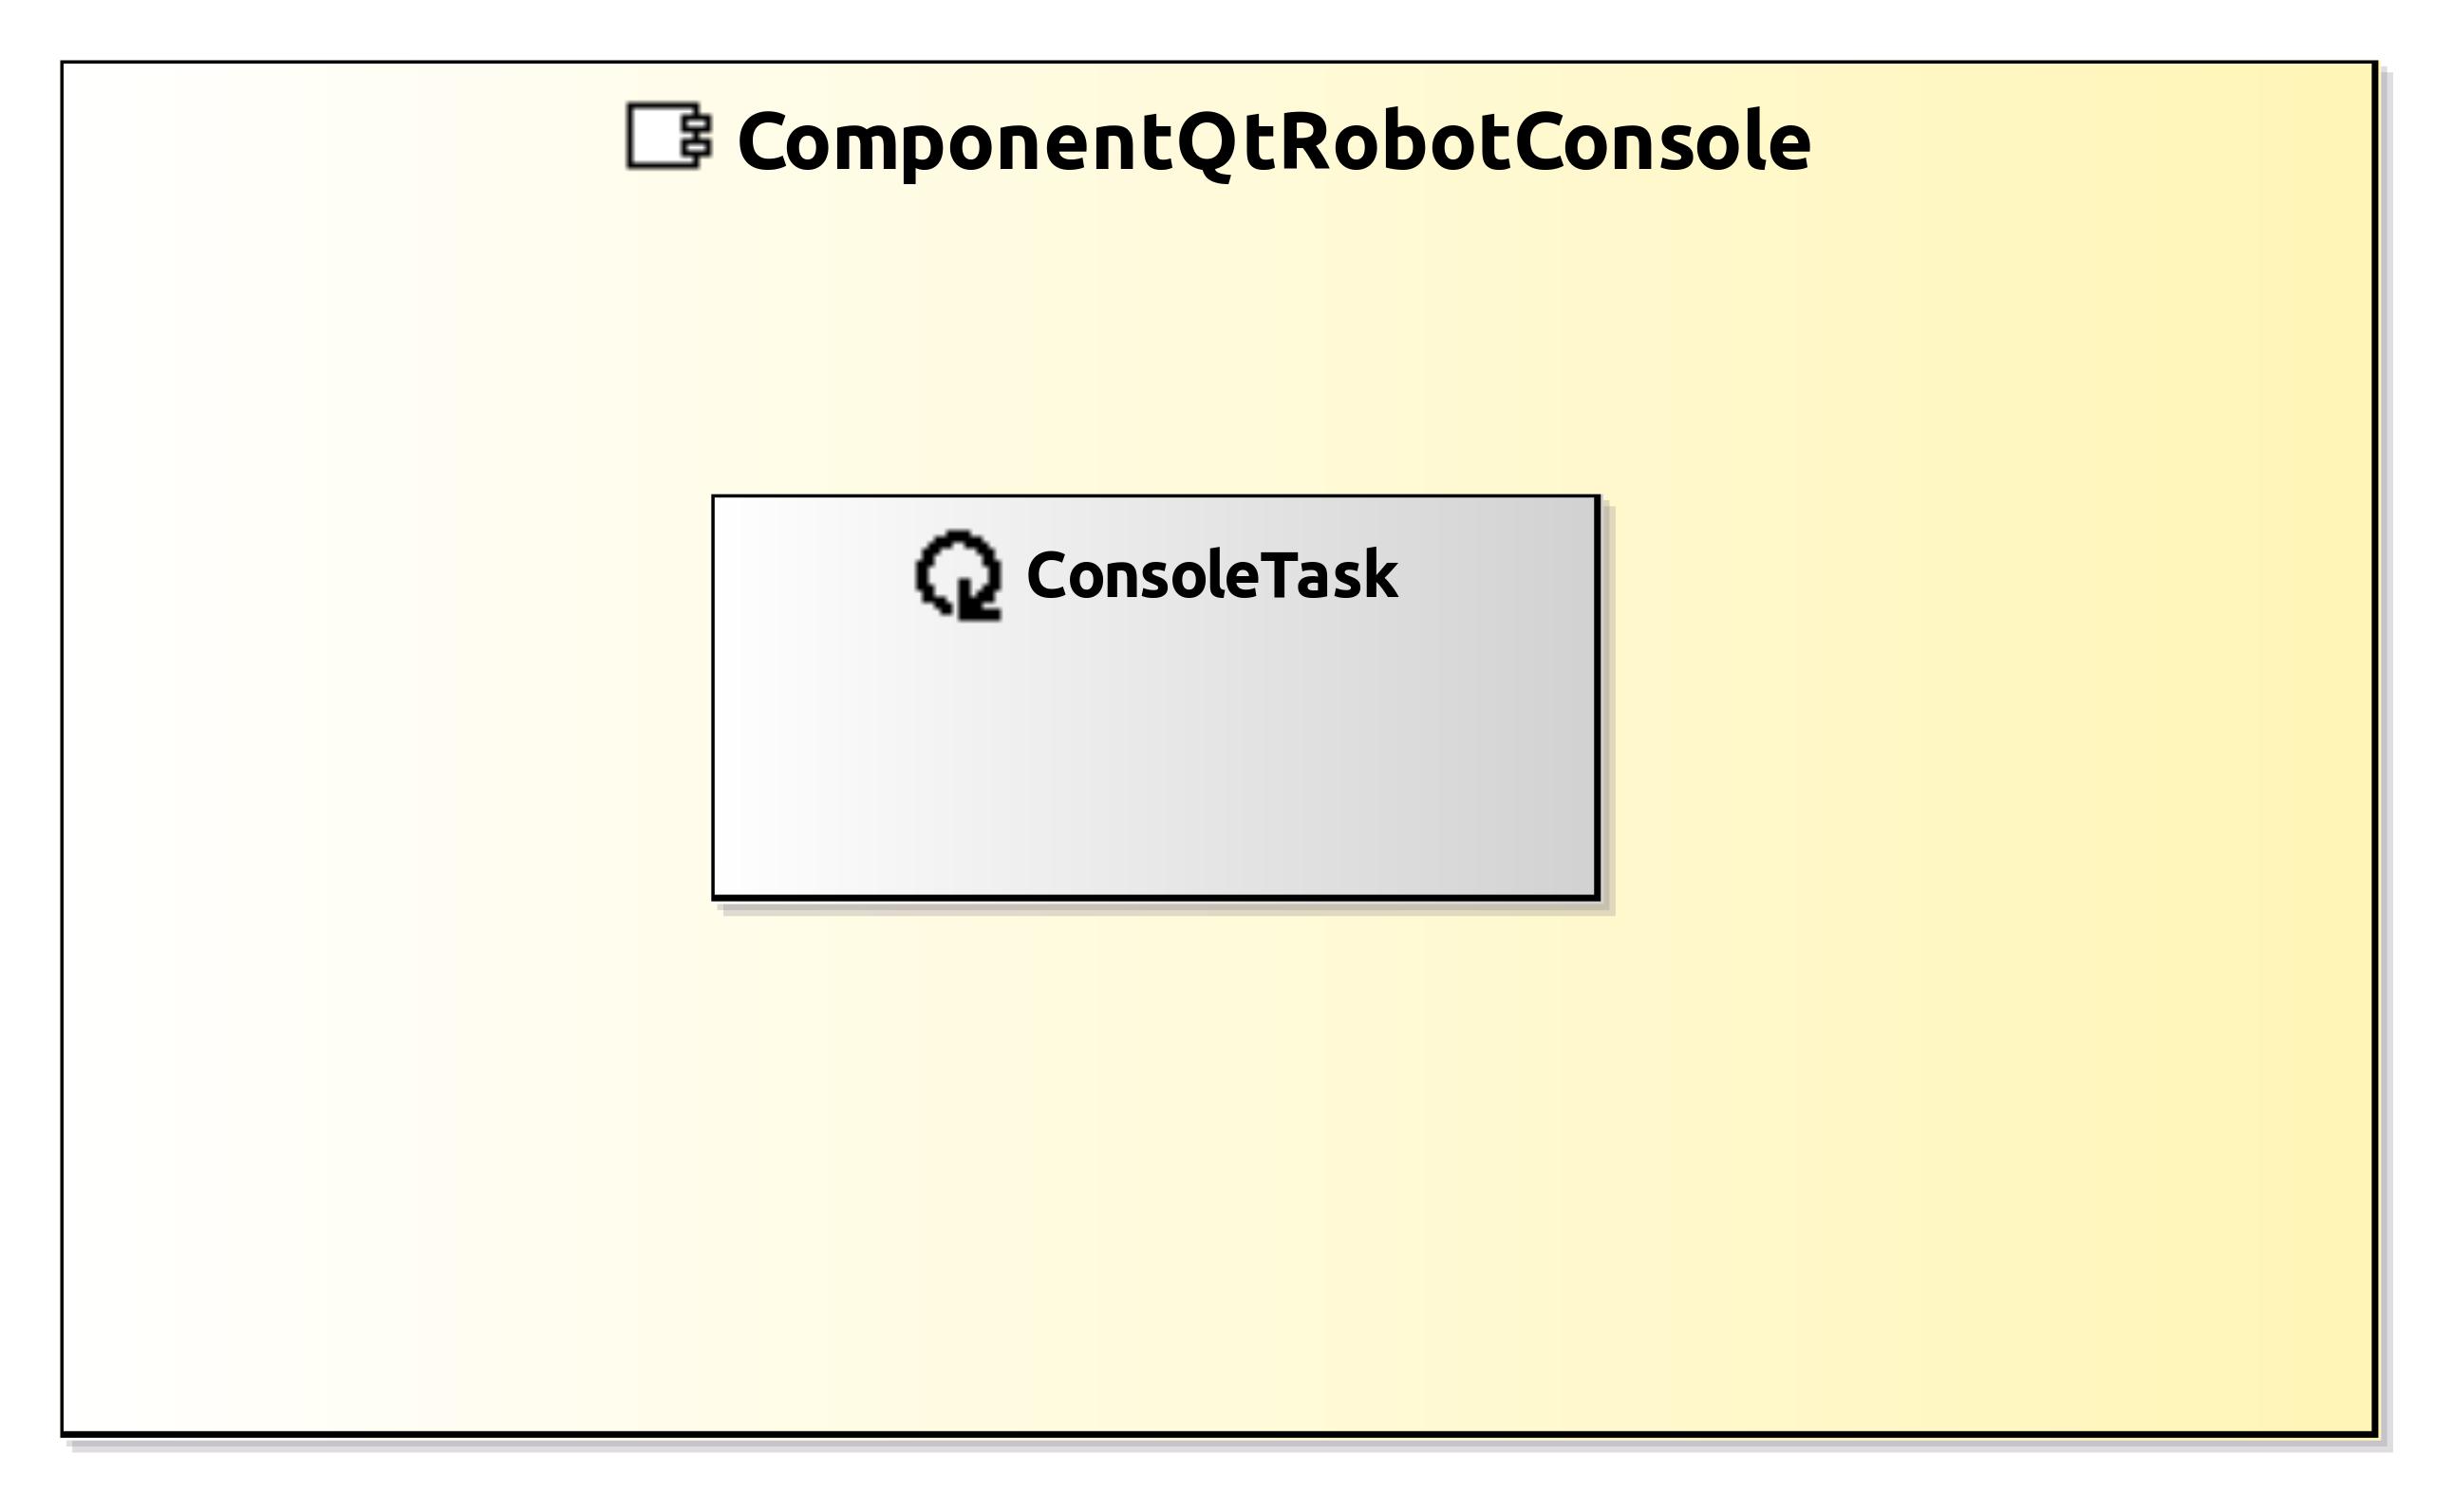 raw.githubusercontent.com_servicerobotics-ulm_componentrepository_master_componentqtrobotconsole_model_componentqtrobotconsolecomponentdefinition.jpg